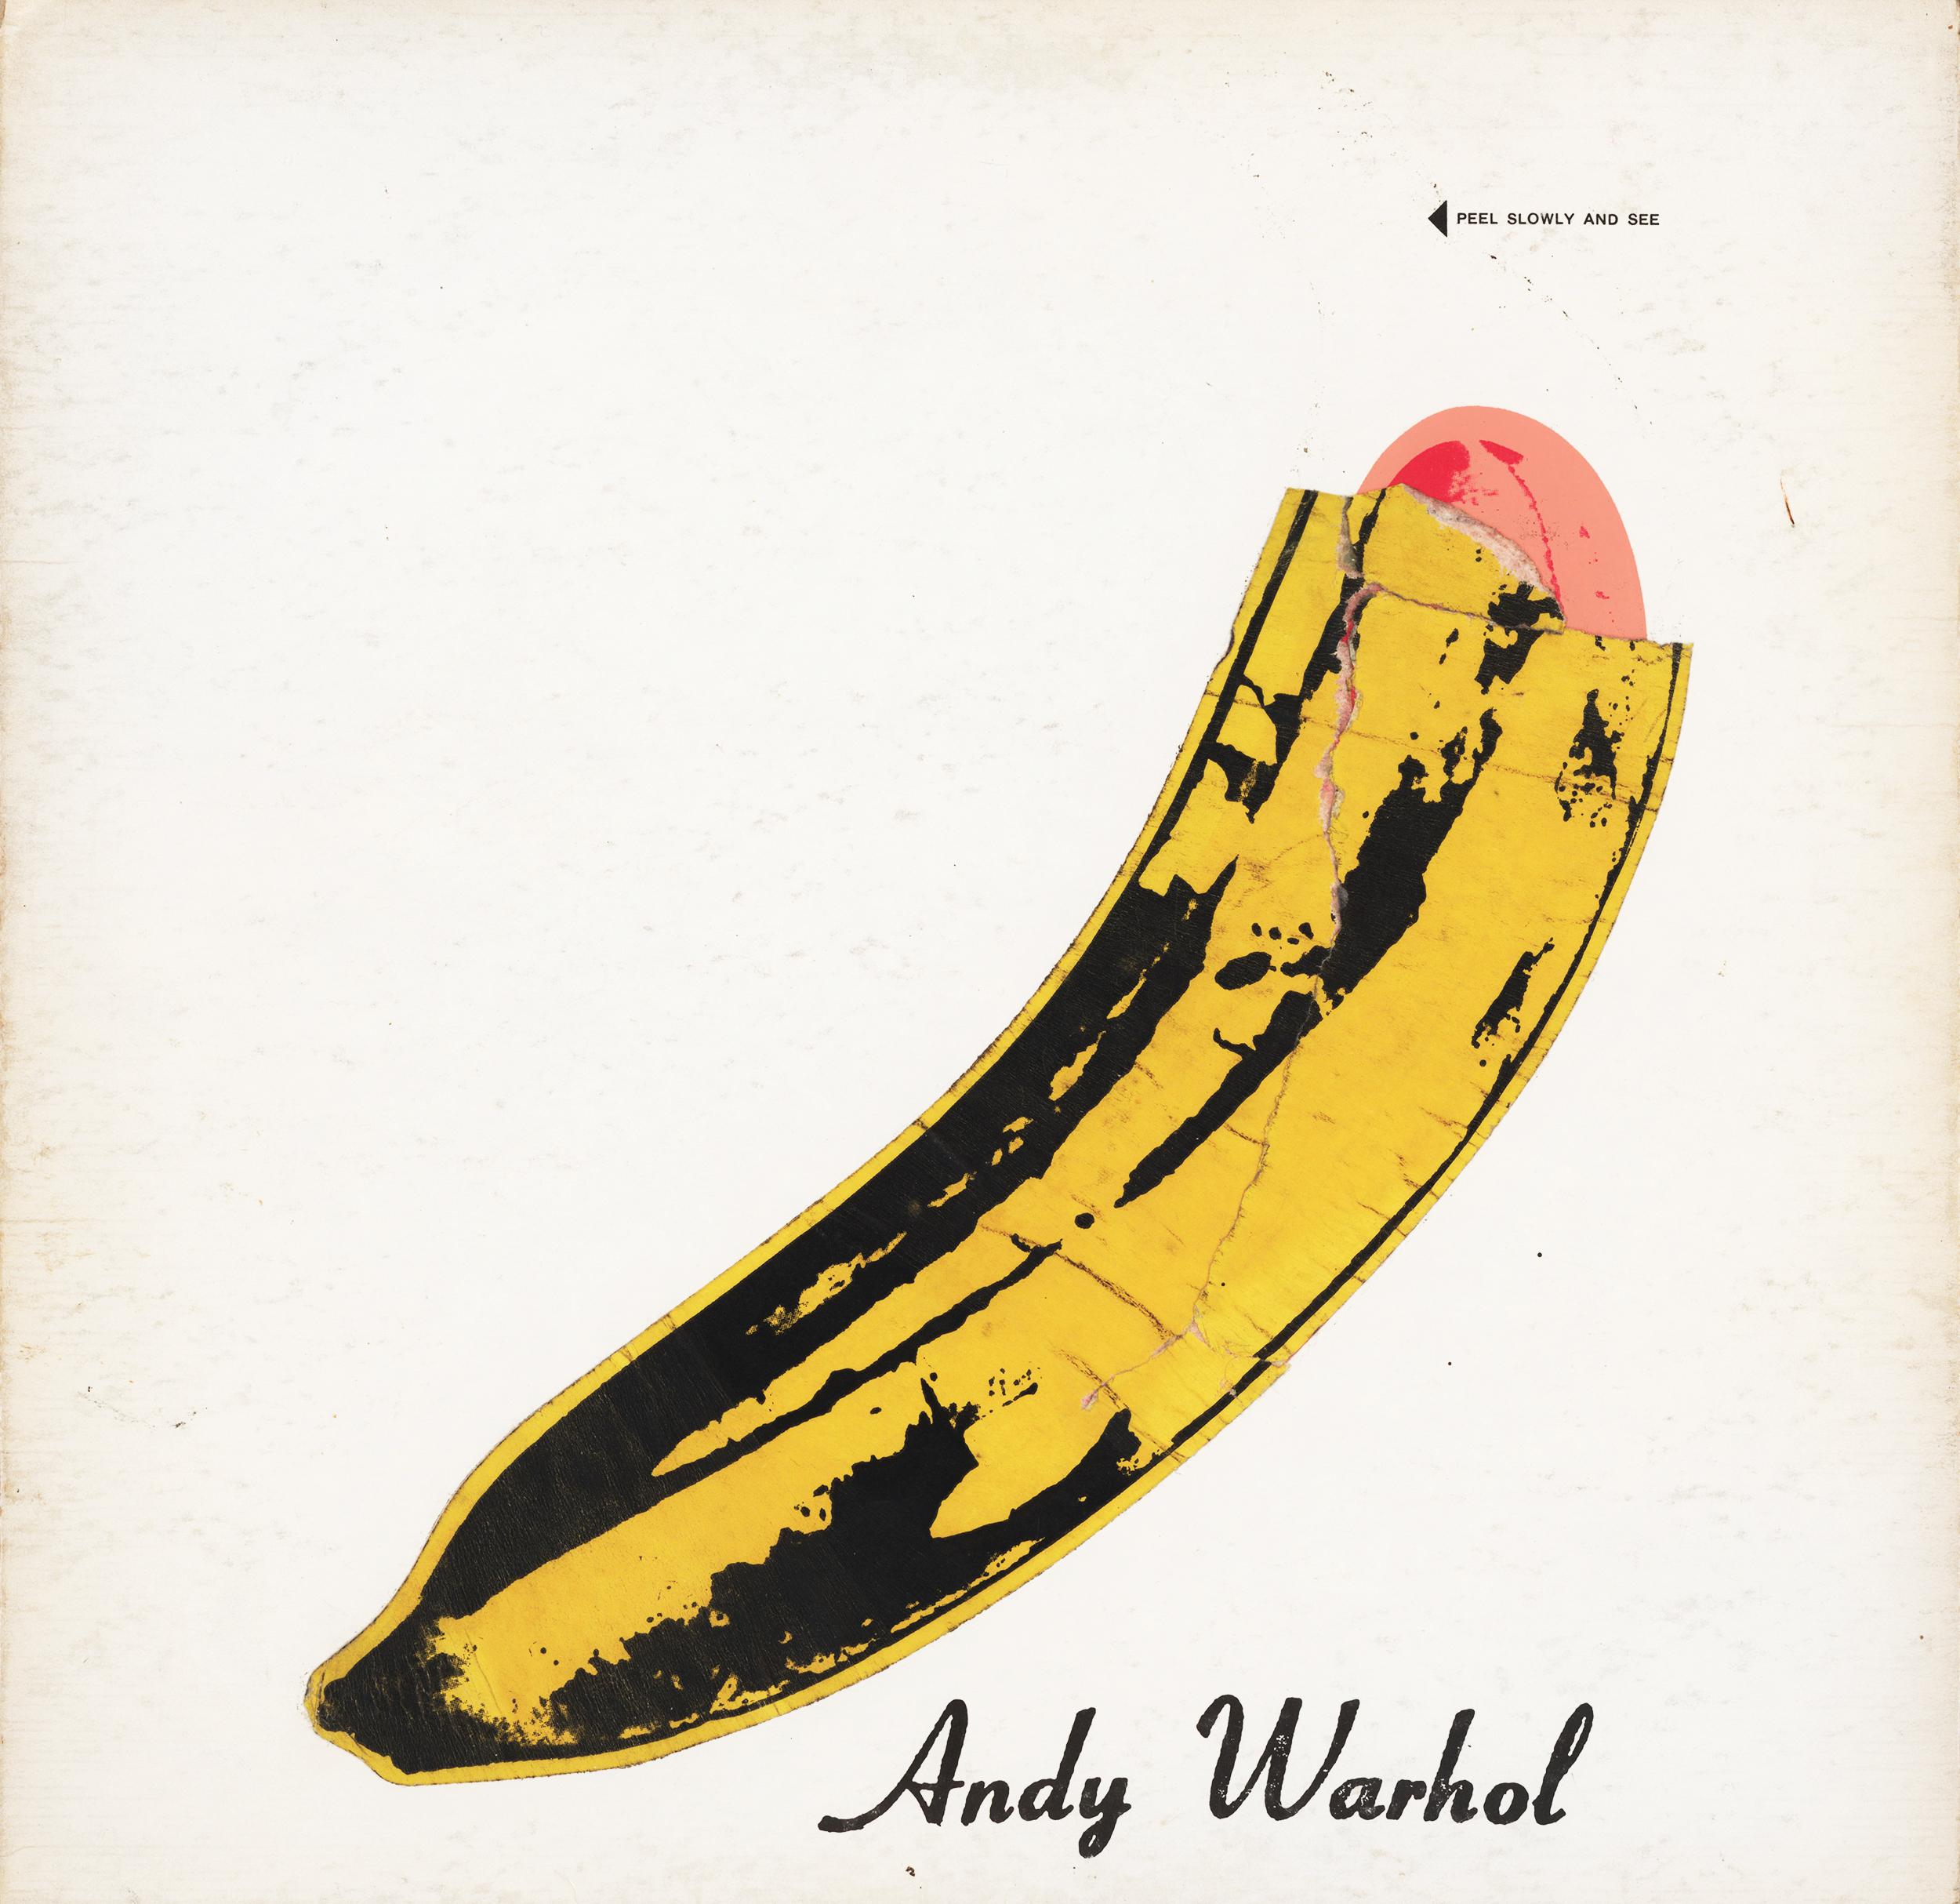 Revêtement banane Warhol : Nico & The Velvet Underground Vinyl Record - Print de Andy Warhol